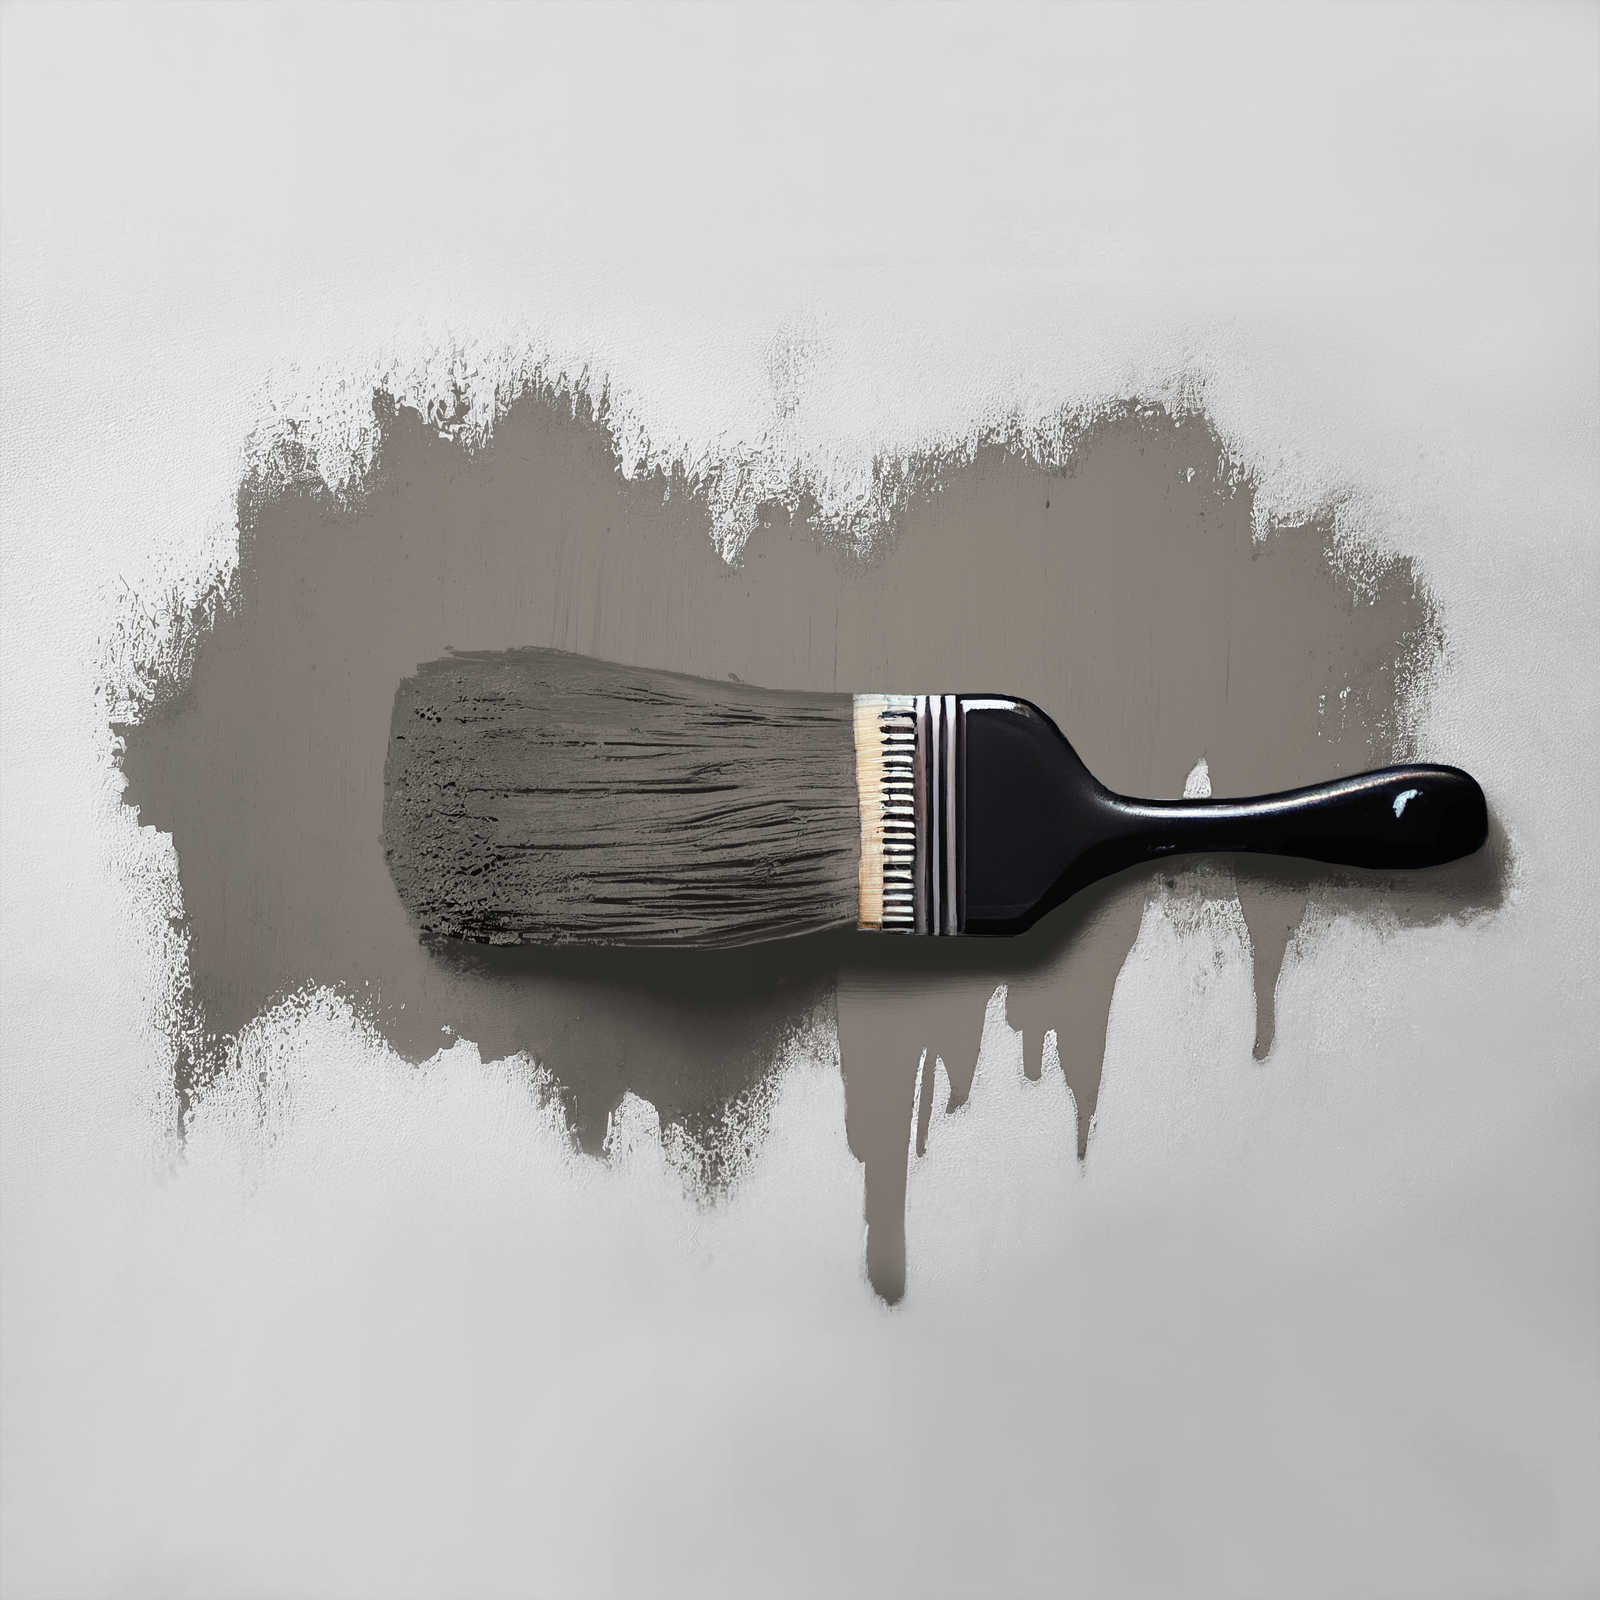             Pittura murale TCK1021 »Earl Grey Tea« in grigioverde – 2,5 litri
        